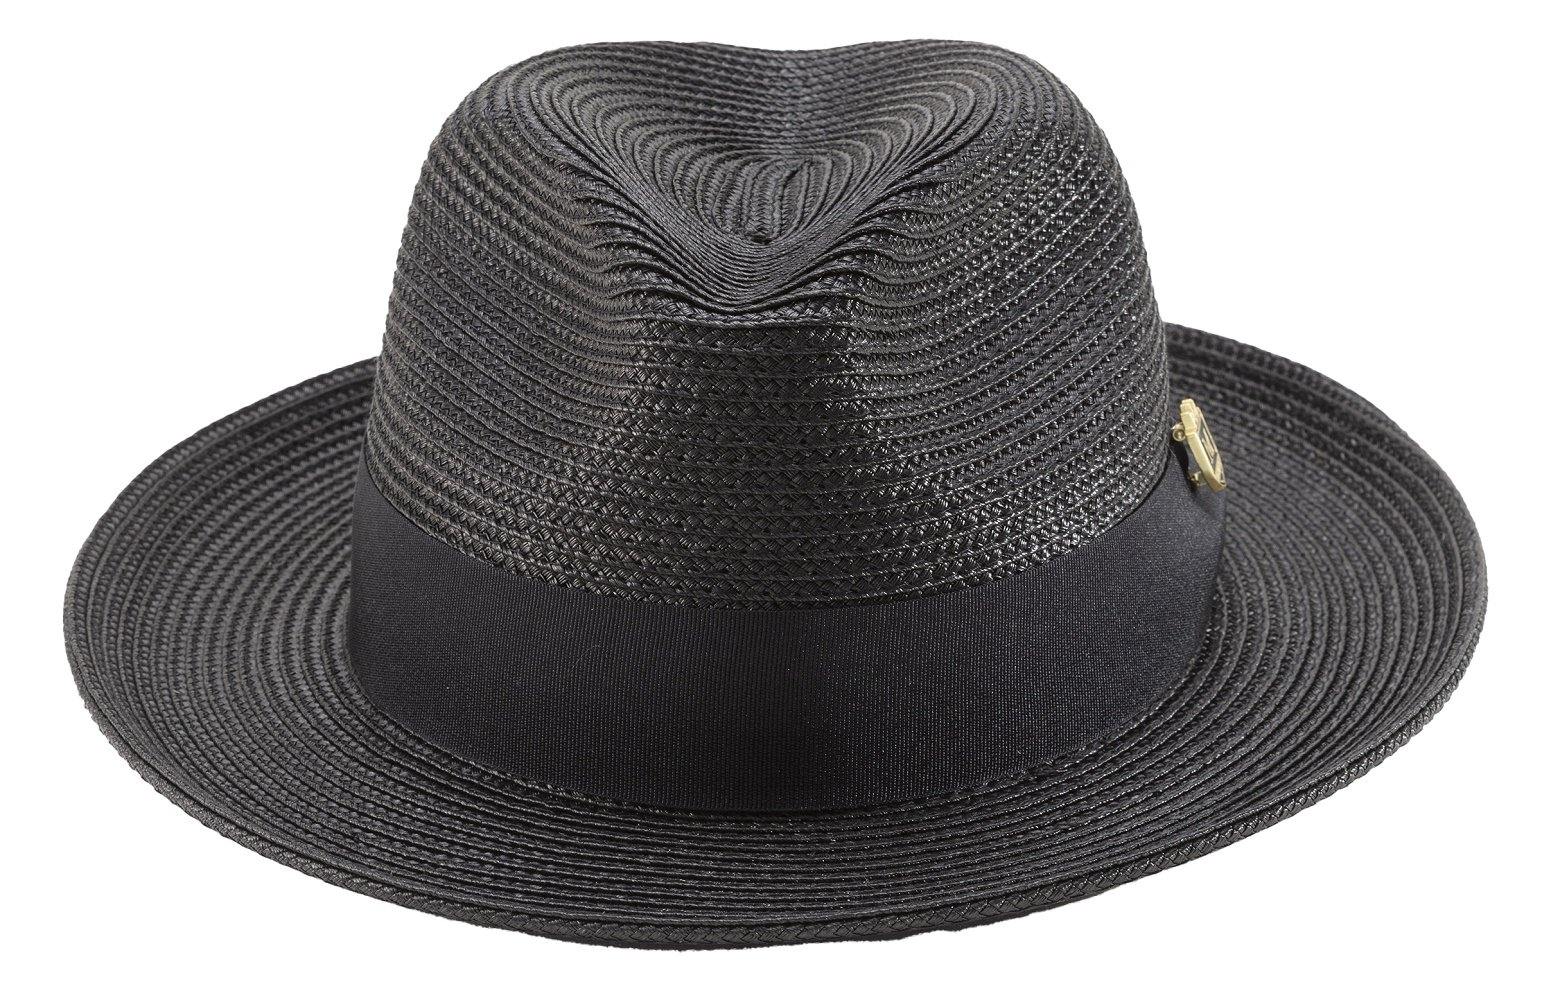 Men's Braided Wide Brim Pinch Fedora Matching Grosgrain Ribbon Hat in Black H-42 - Suits & More